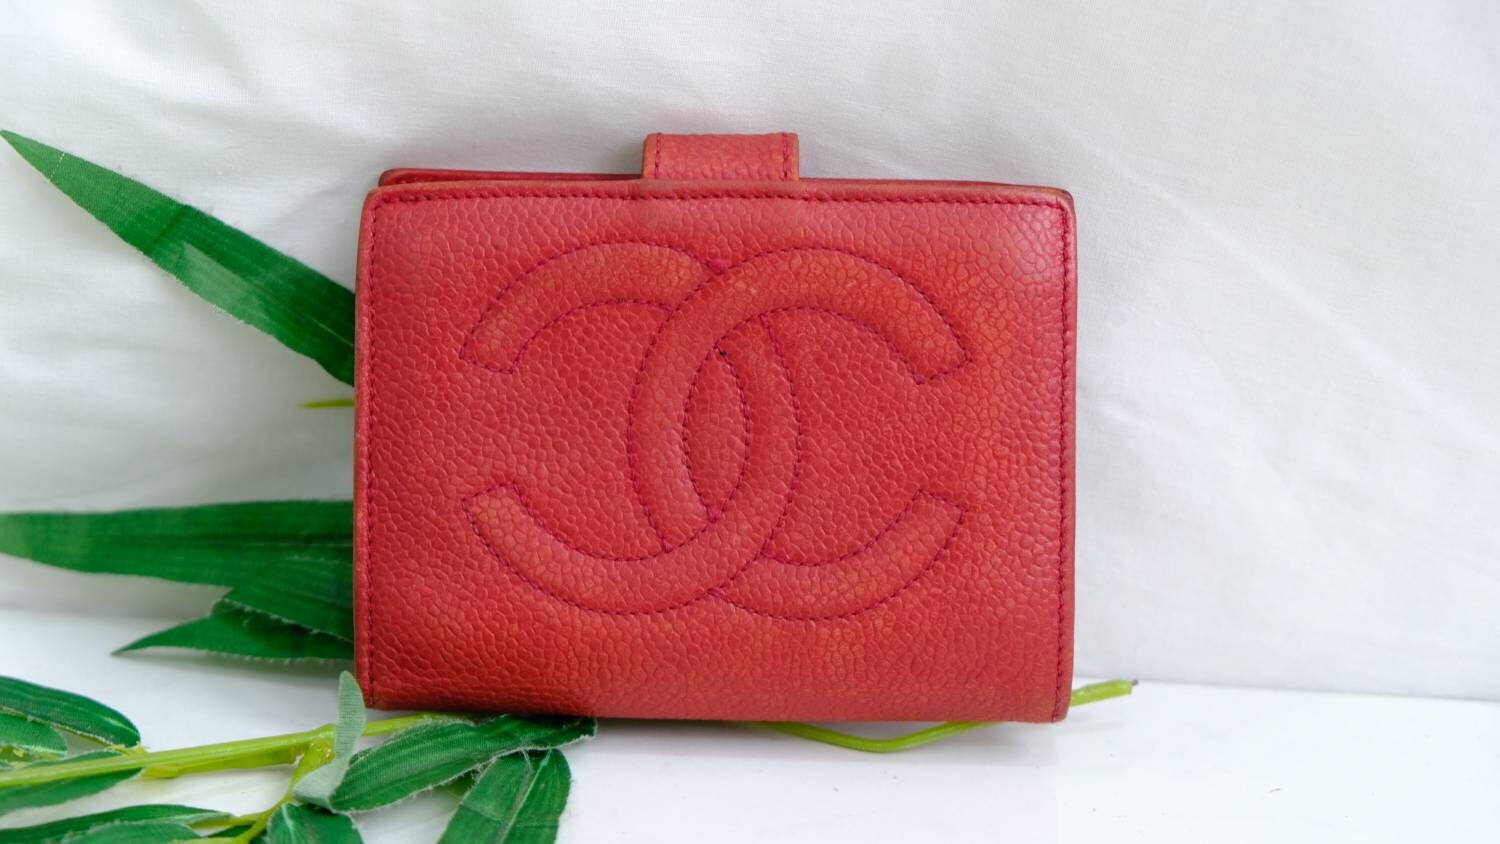 Chanel Vintage Wallet 